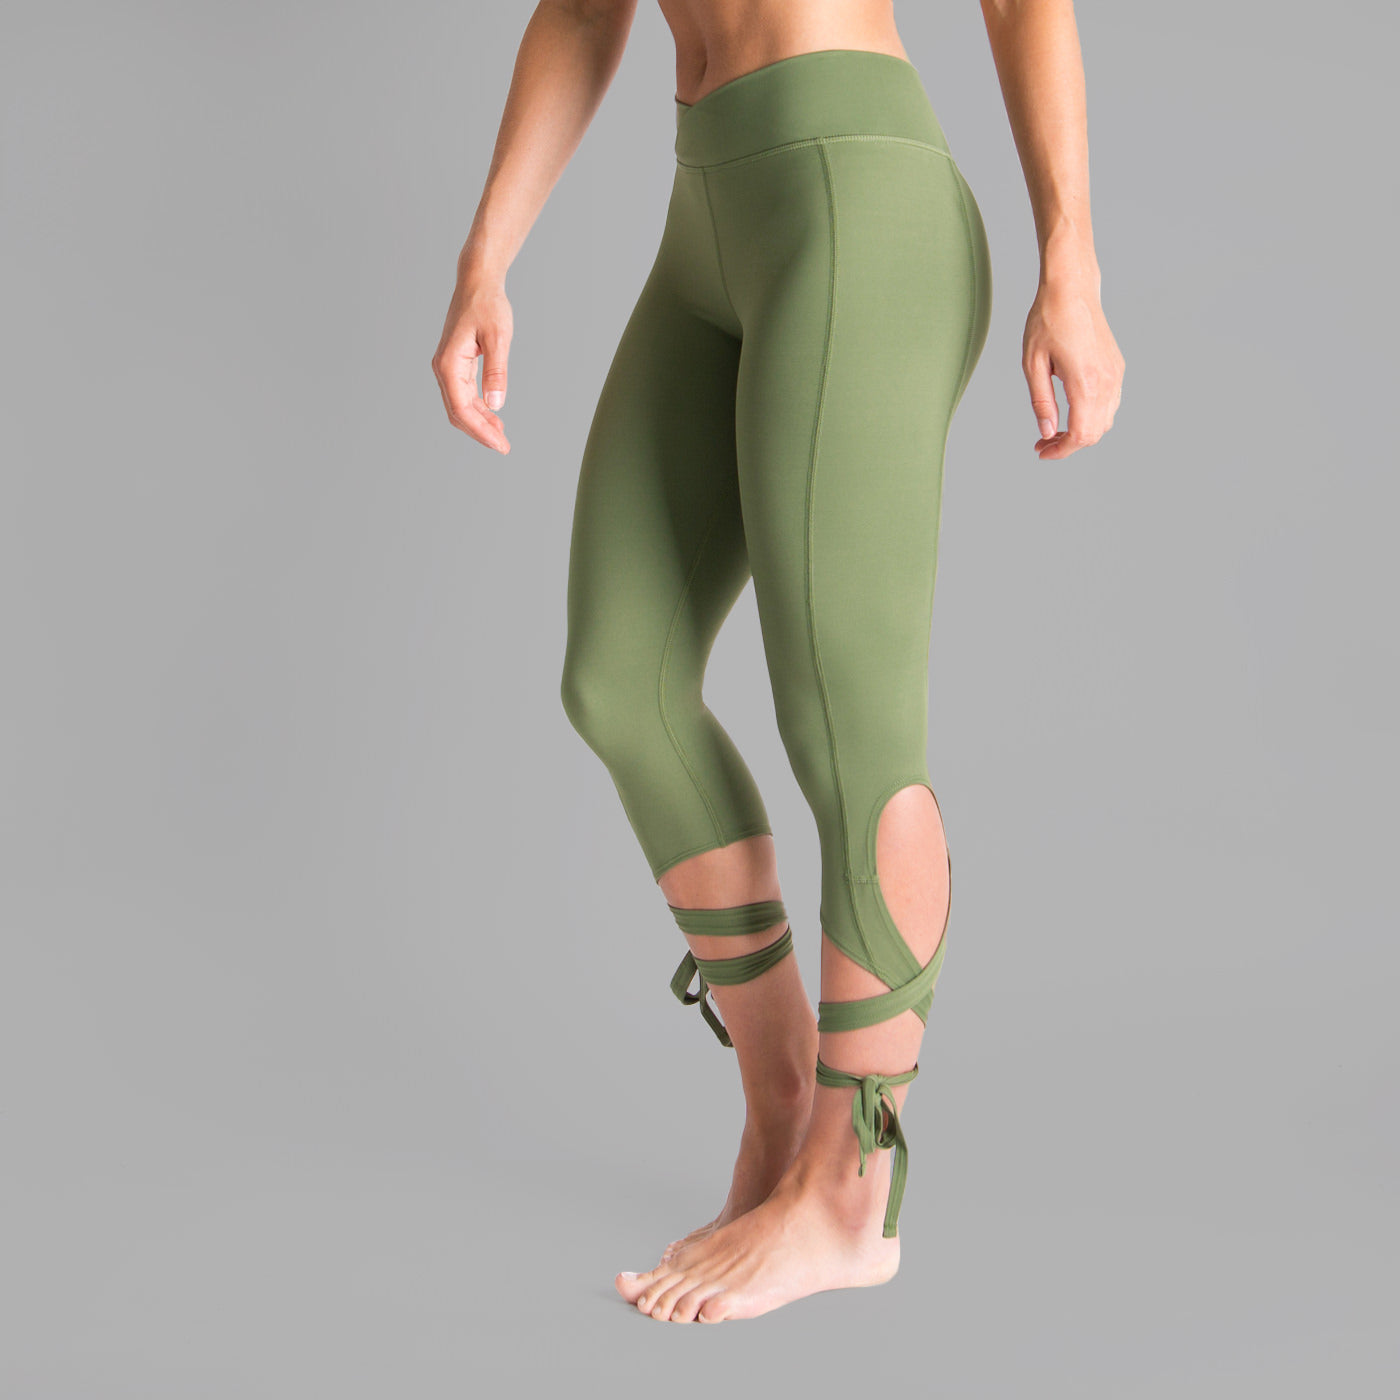 YHWW Leggings,Women Camouflage Leggings Fitness Military Army Green  Leggings Workout Pants Sporter Skinny Adventure Leggings